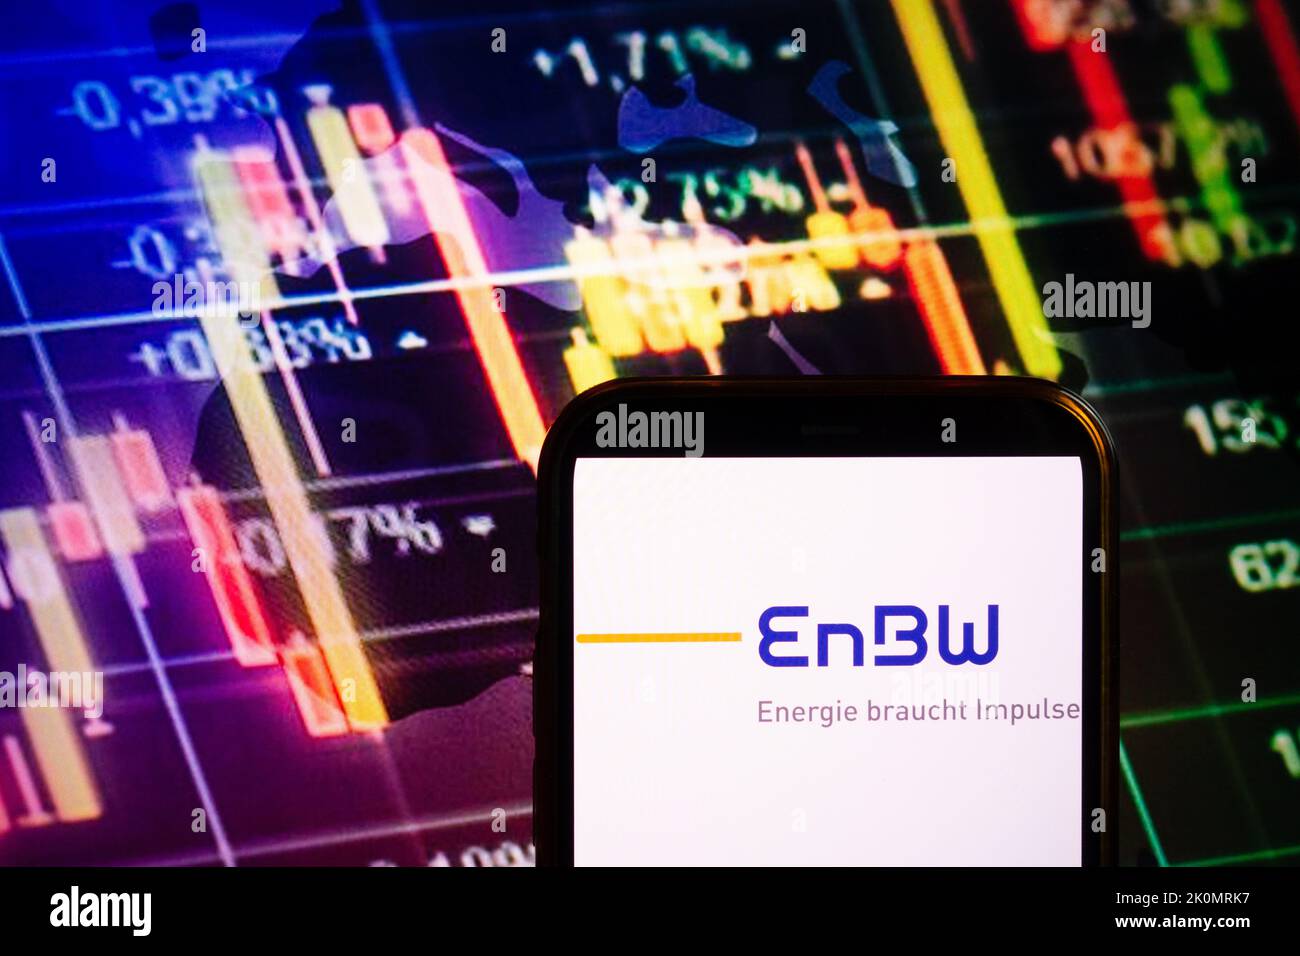 KONSKIE, POLAND - September 10, 2022: Smartphone displaying logo of EnBW Energie company on stock exchange diagram background Stock Photo